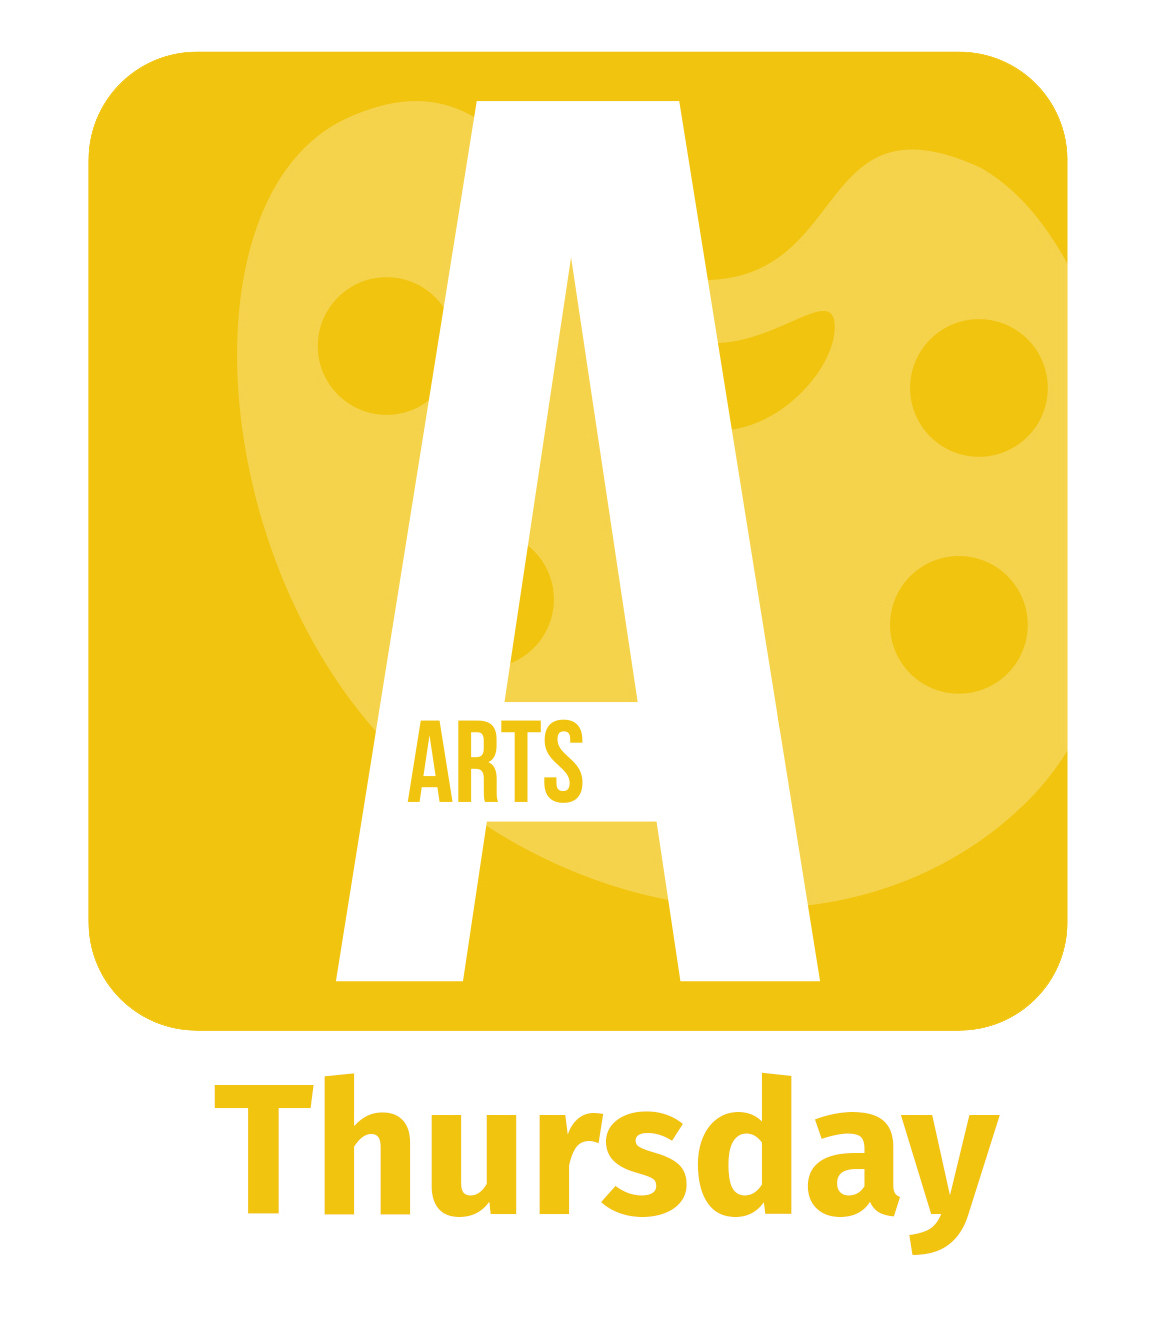 STEAM - Arts Thursday